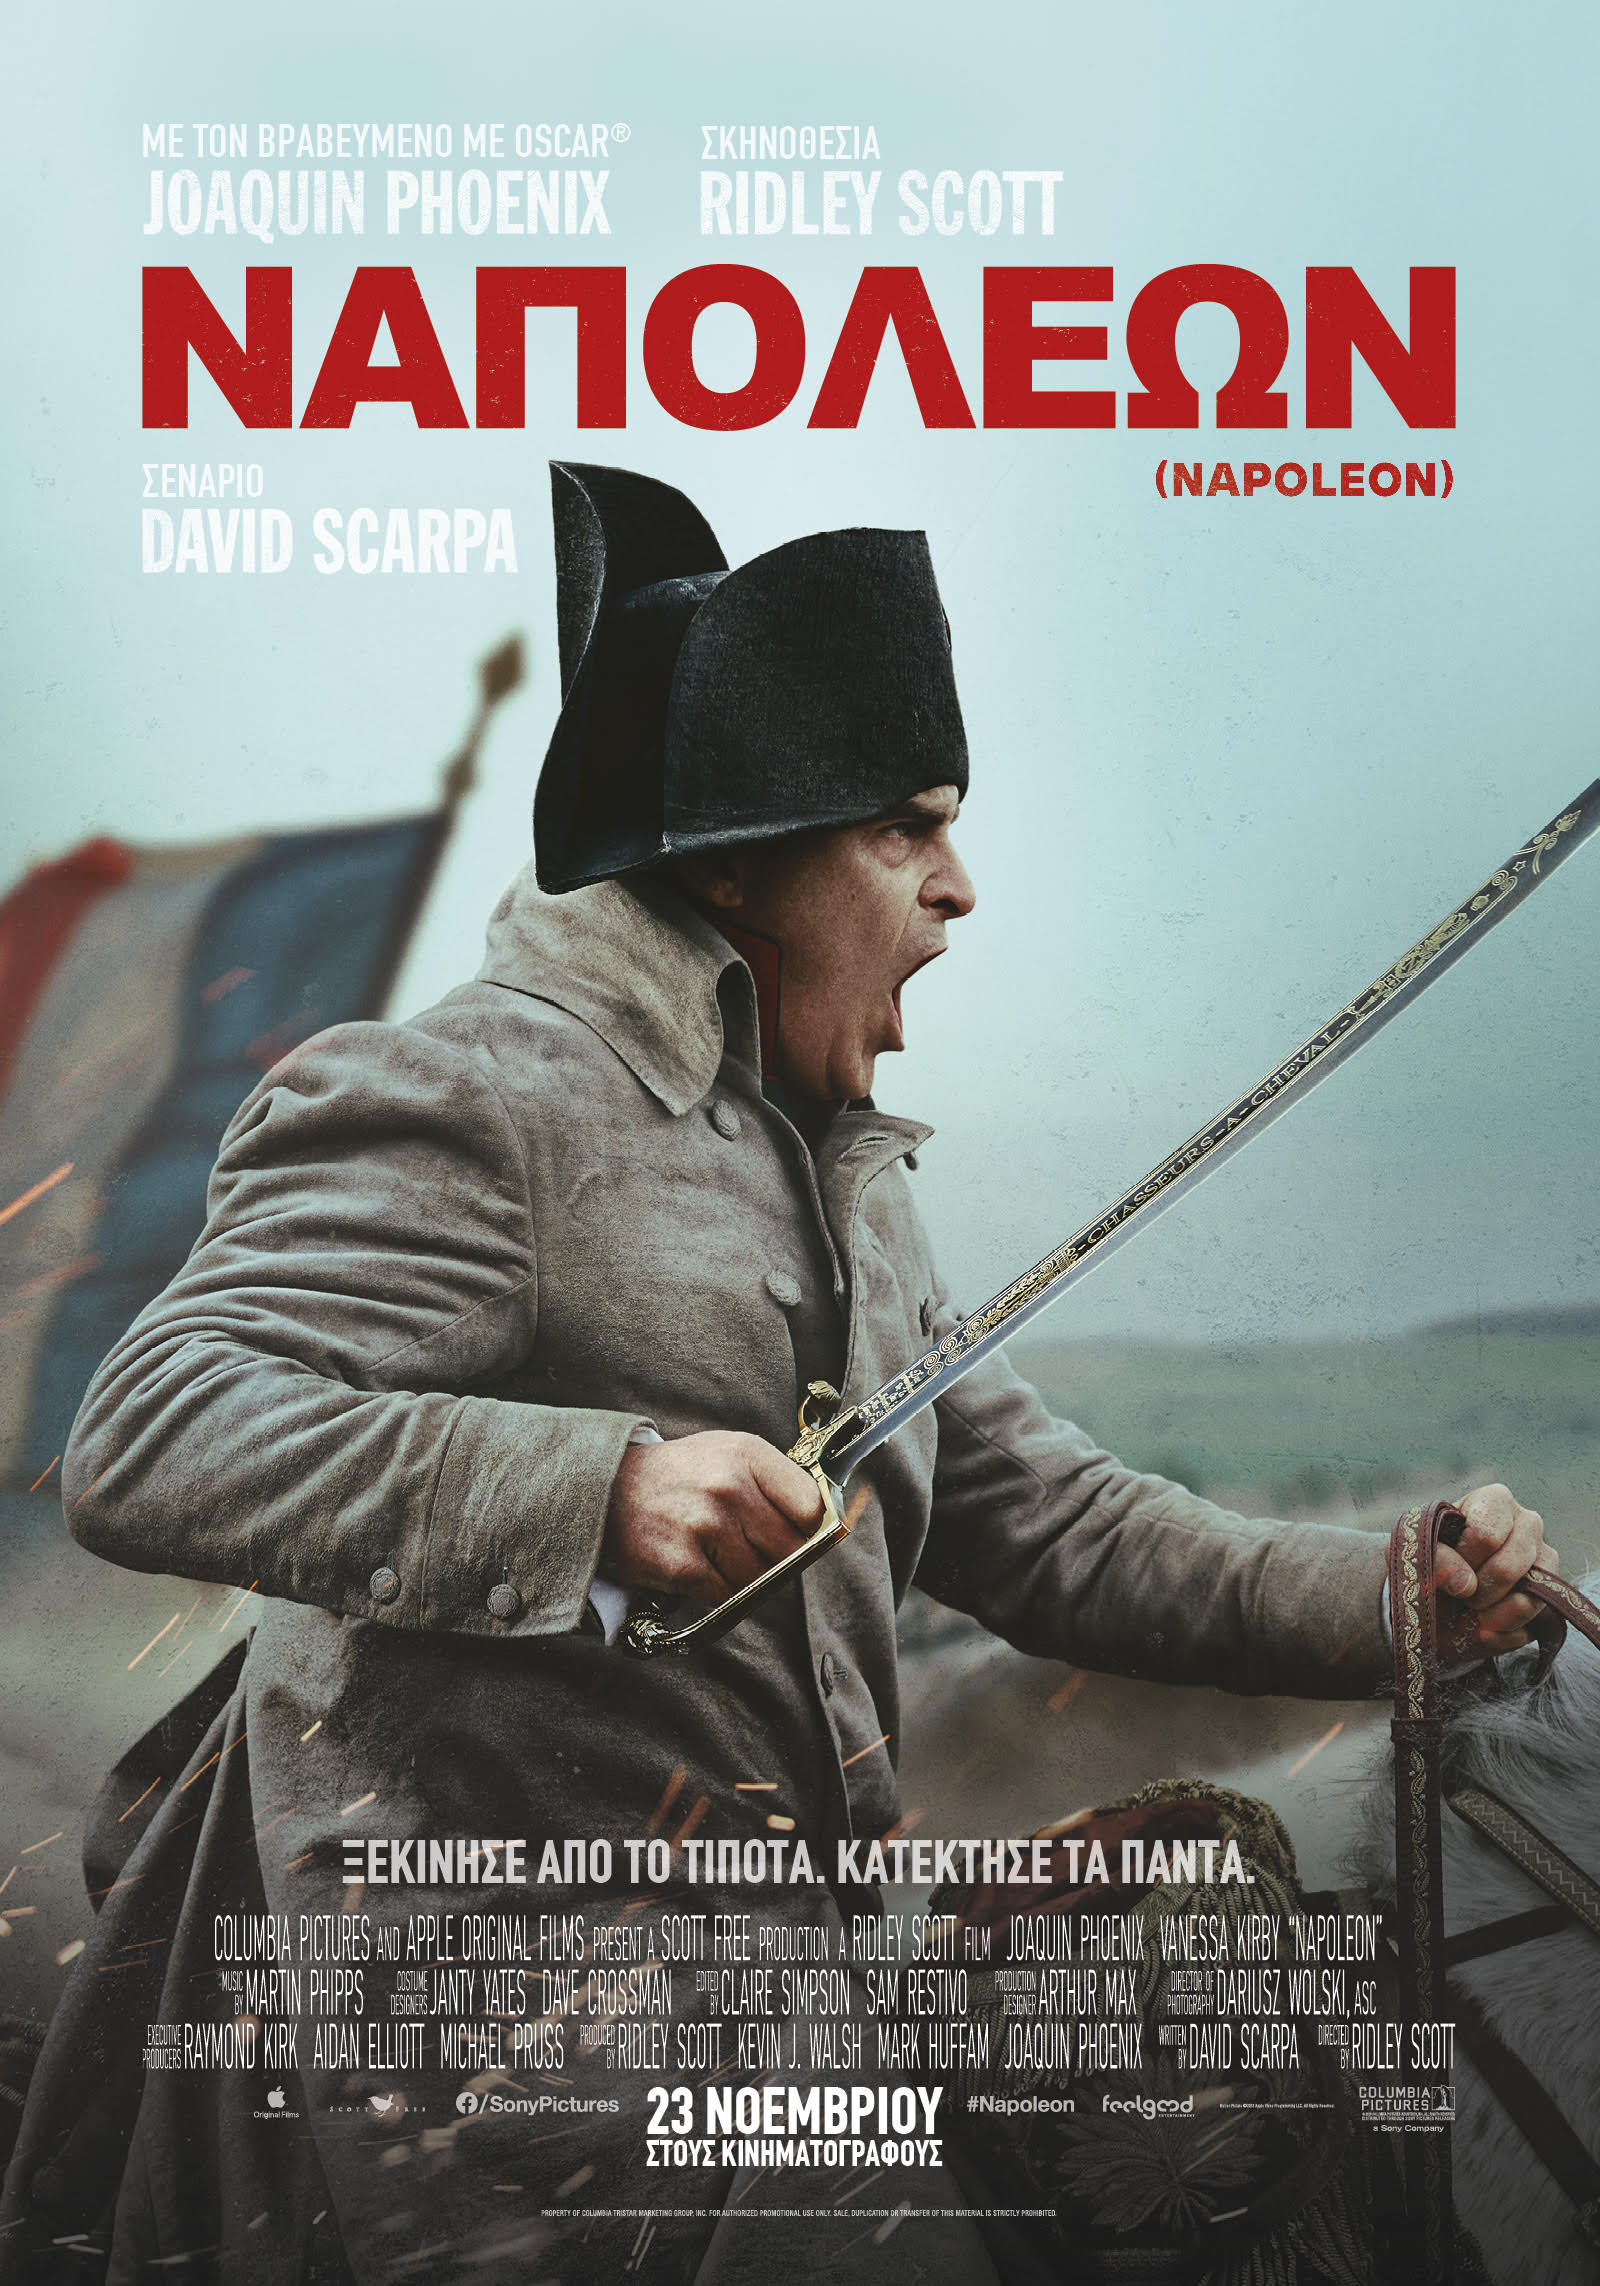 Napoleon trailer